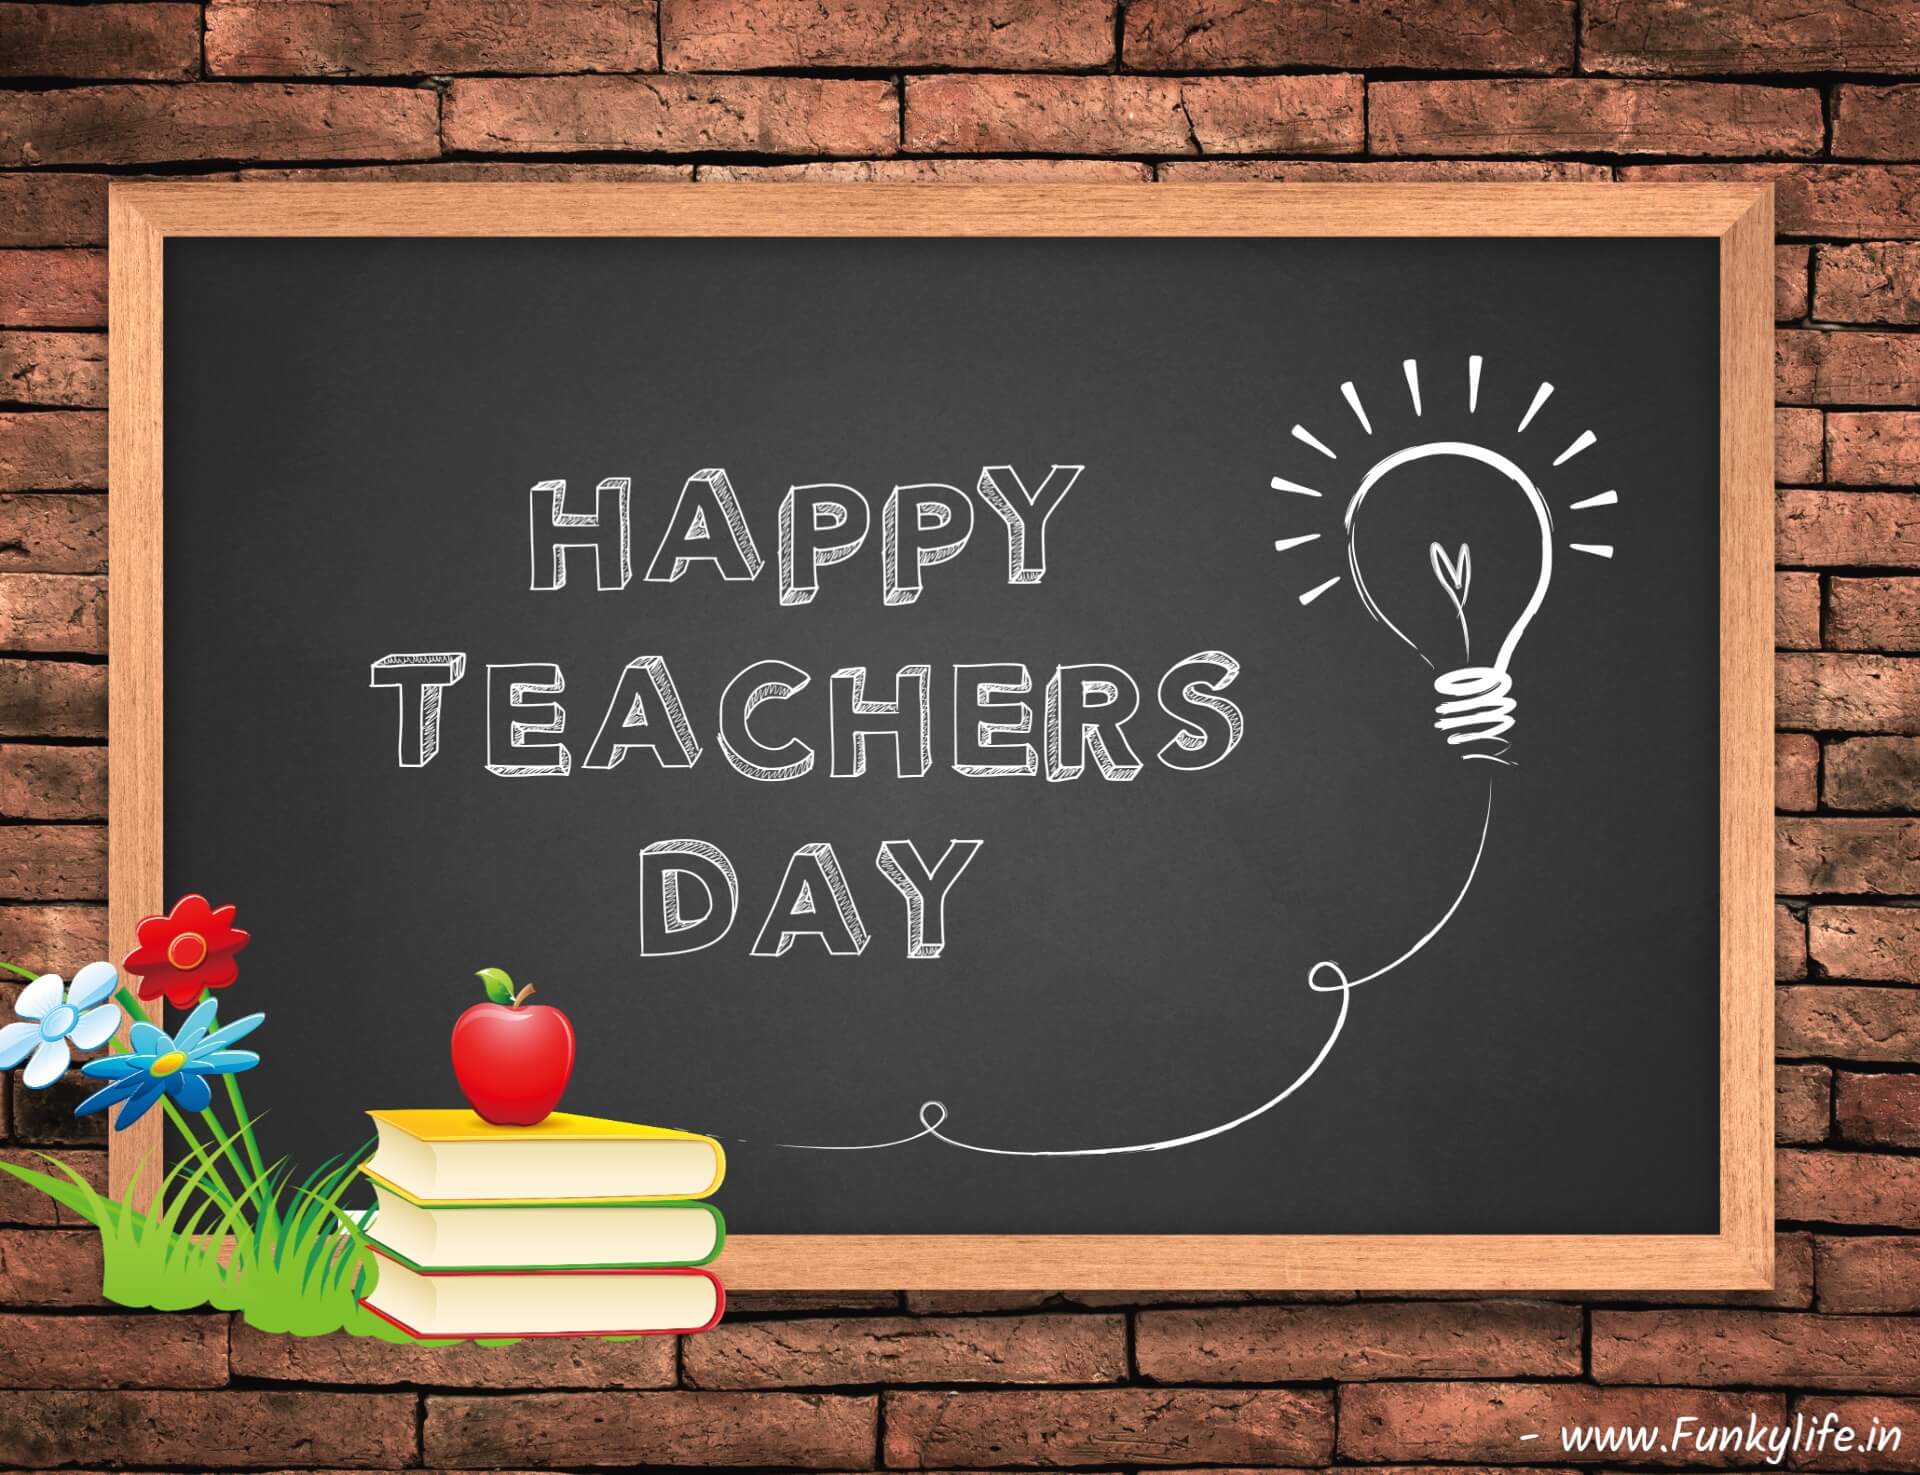 Happy Teachers Day Board Image